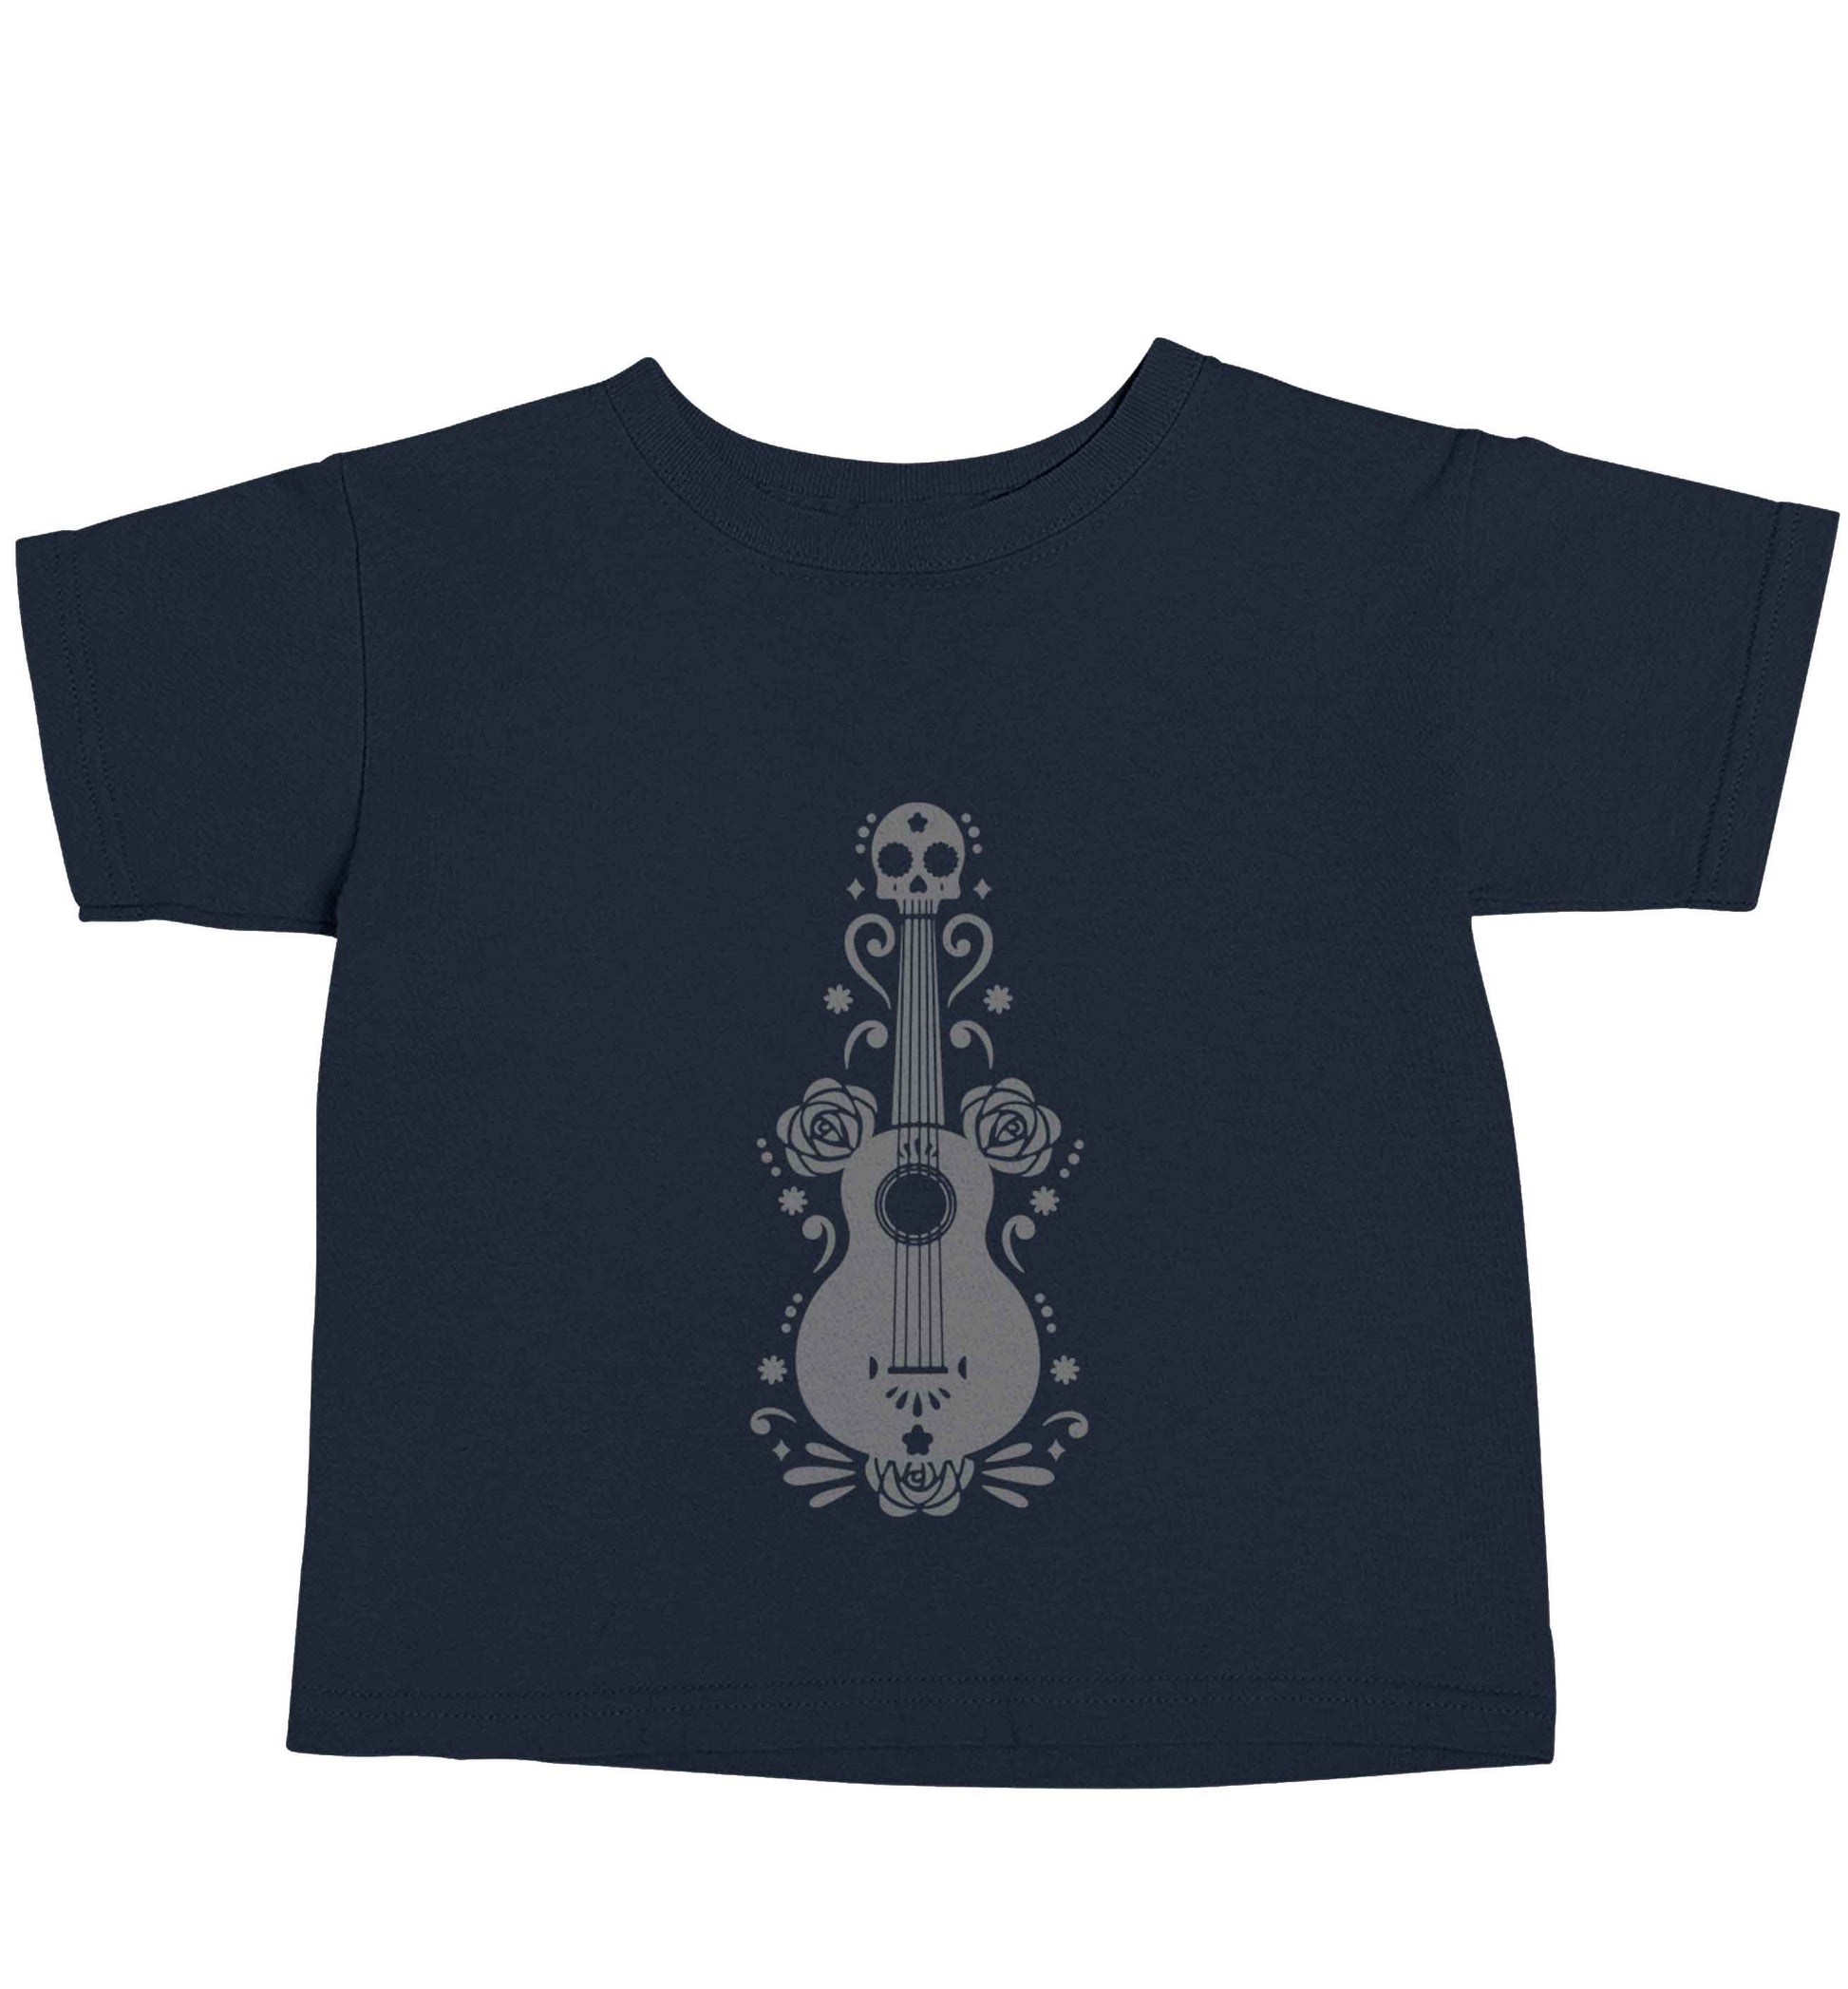 Guitar skull illustration navy baby toddler Tshirt 2 Years